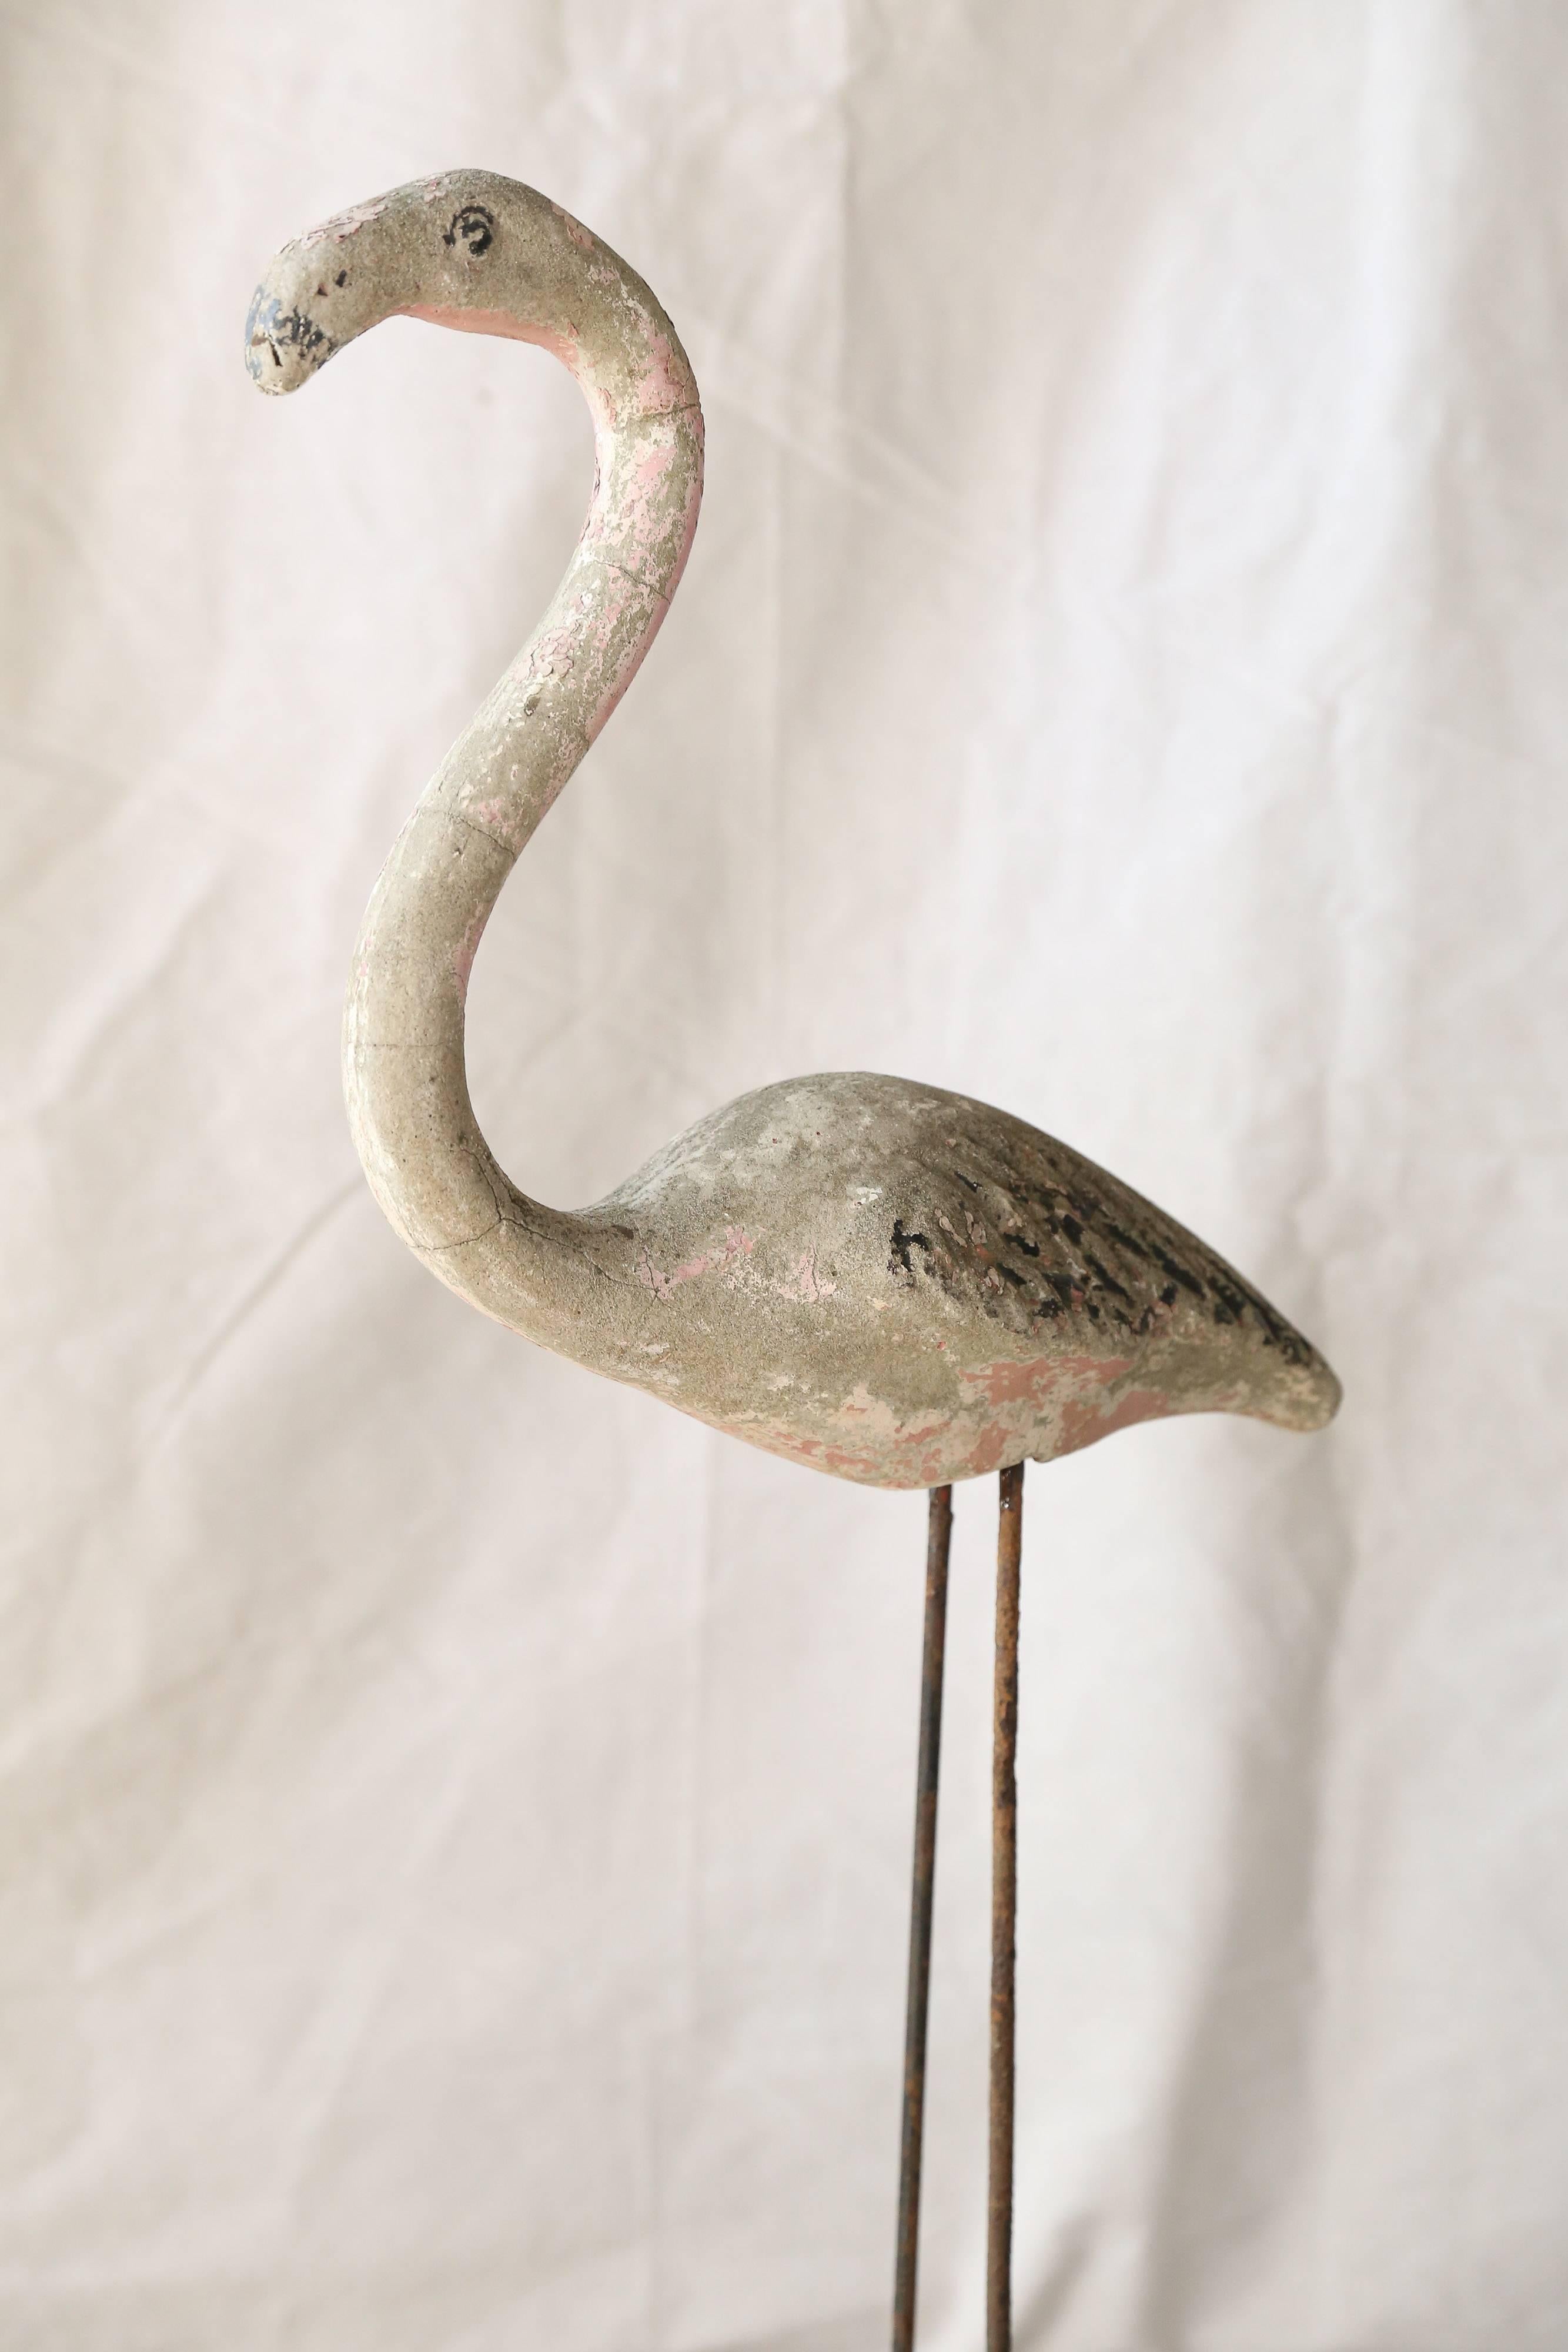 concrete flamingos for sale